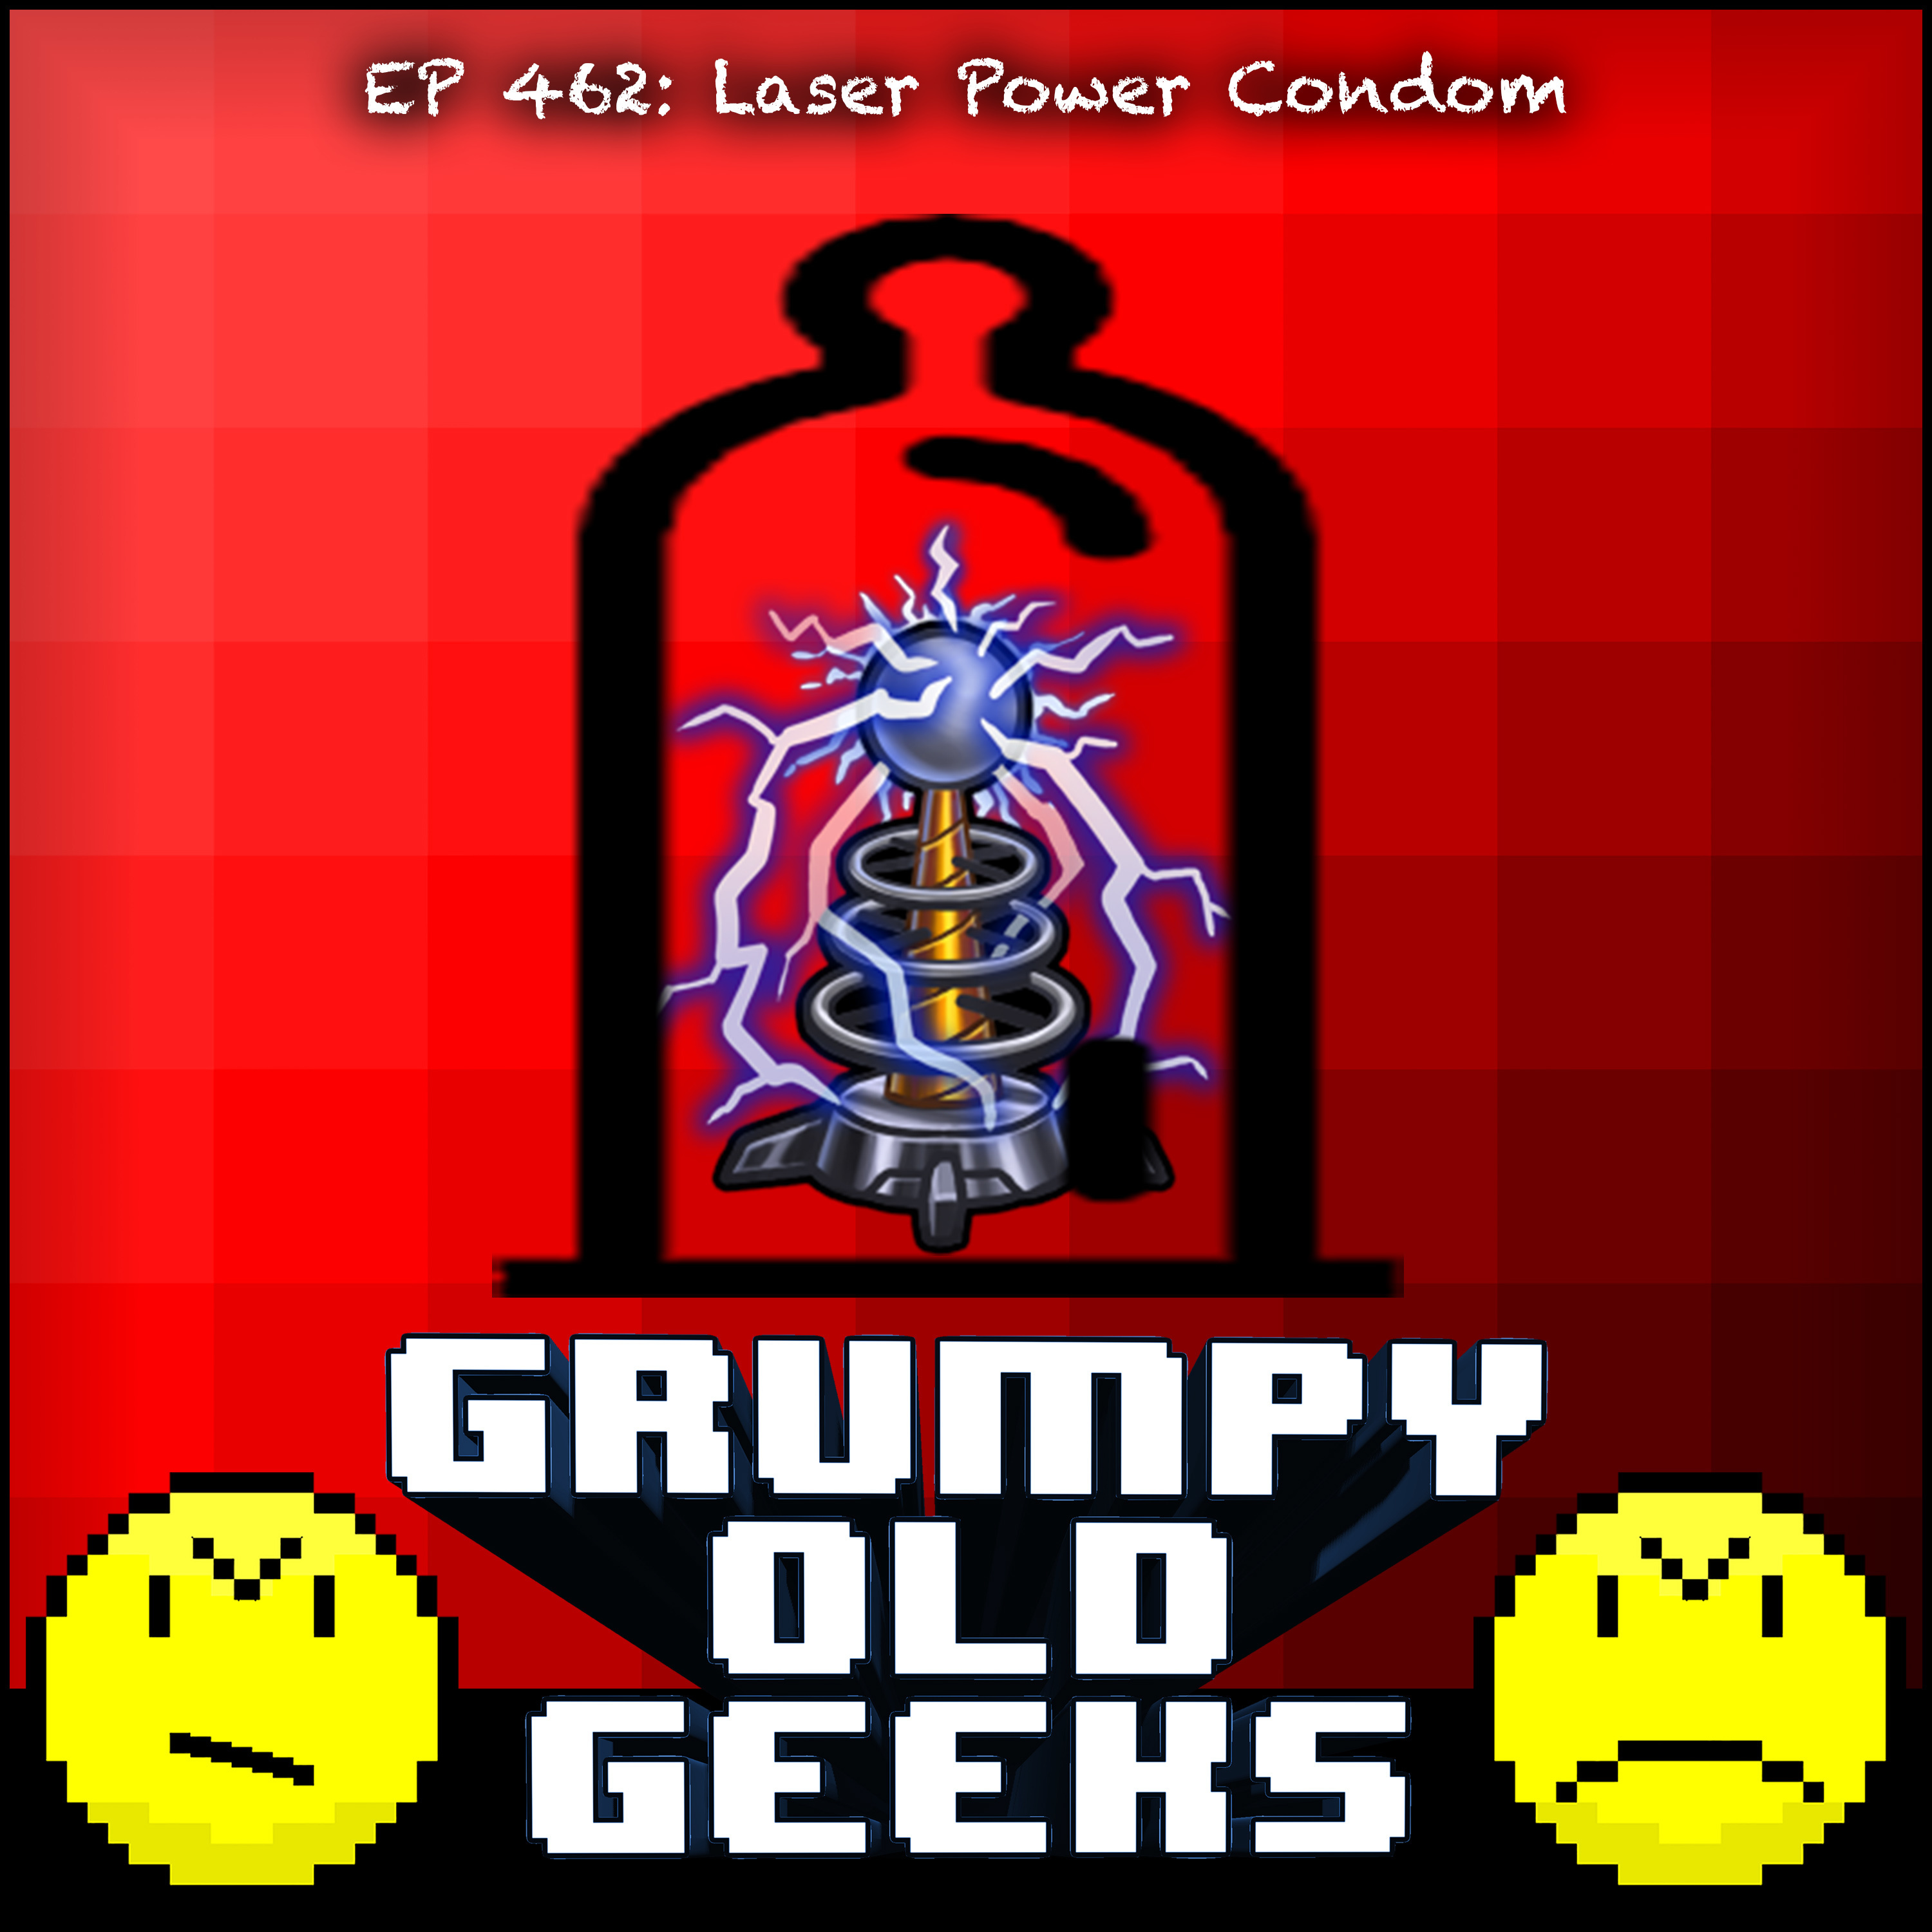 462: Laser Power Condom